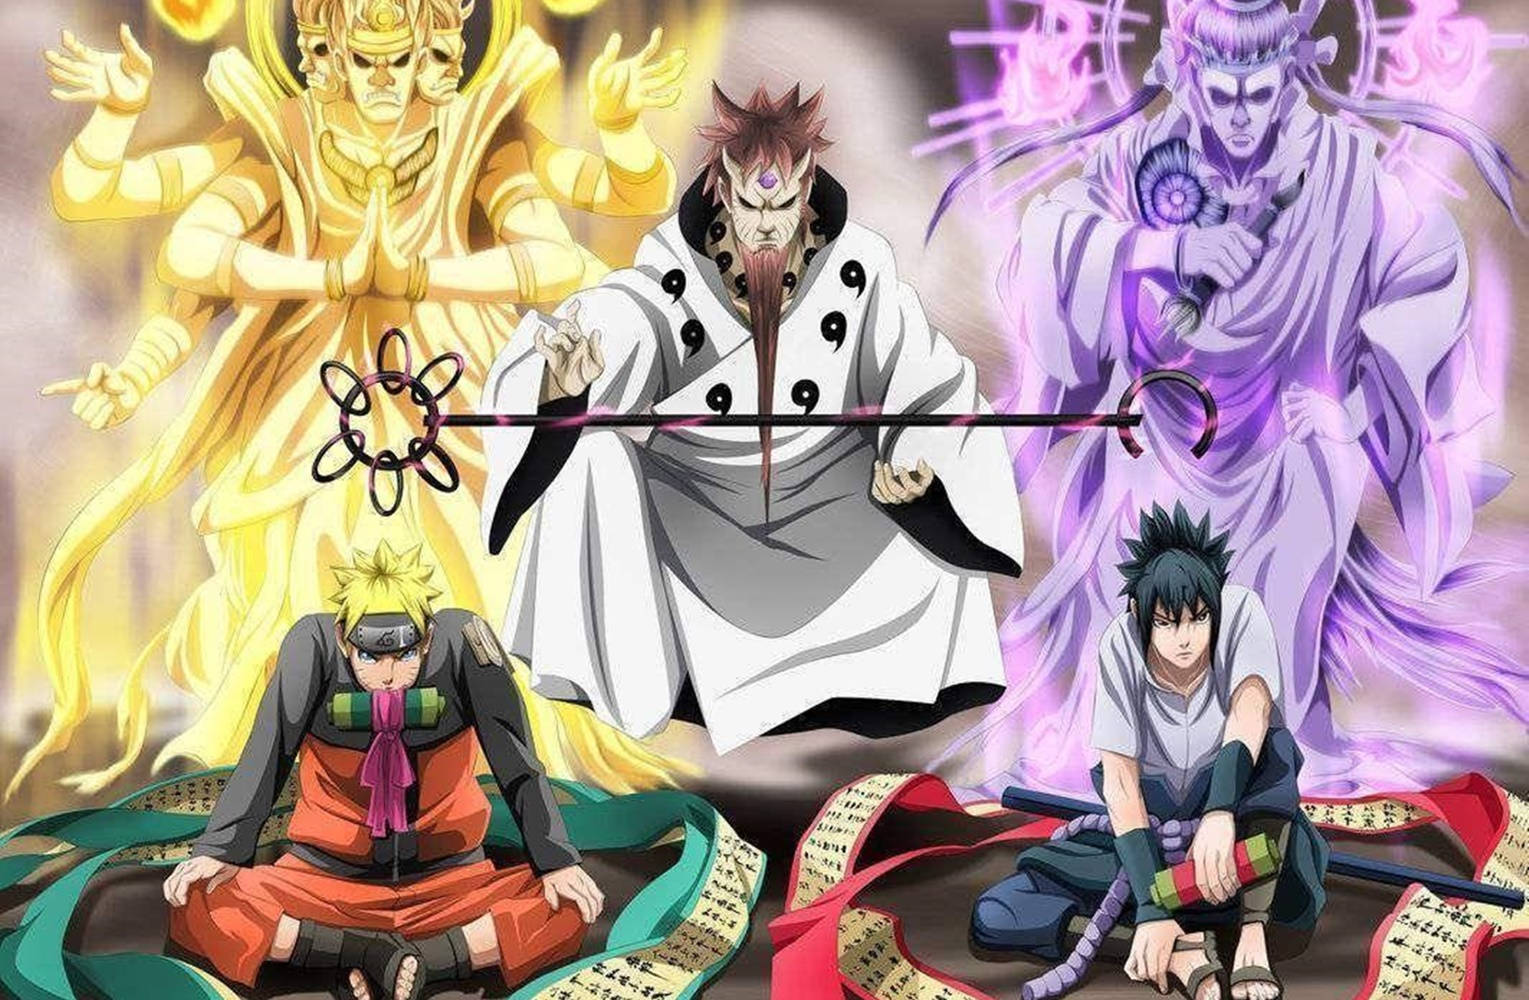 Allenamentodei Personaggi Bunpuko Dell'anime Naruto E Sasuke Sfondo